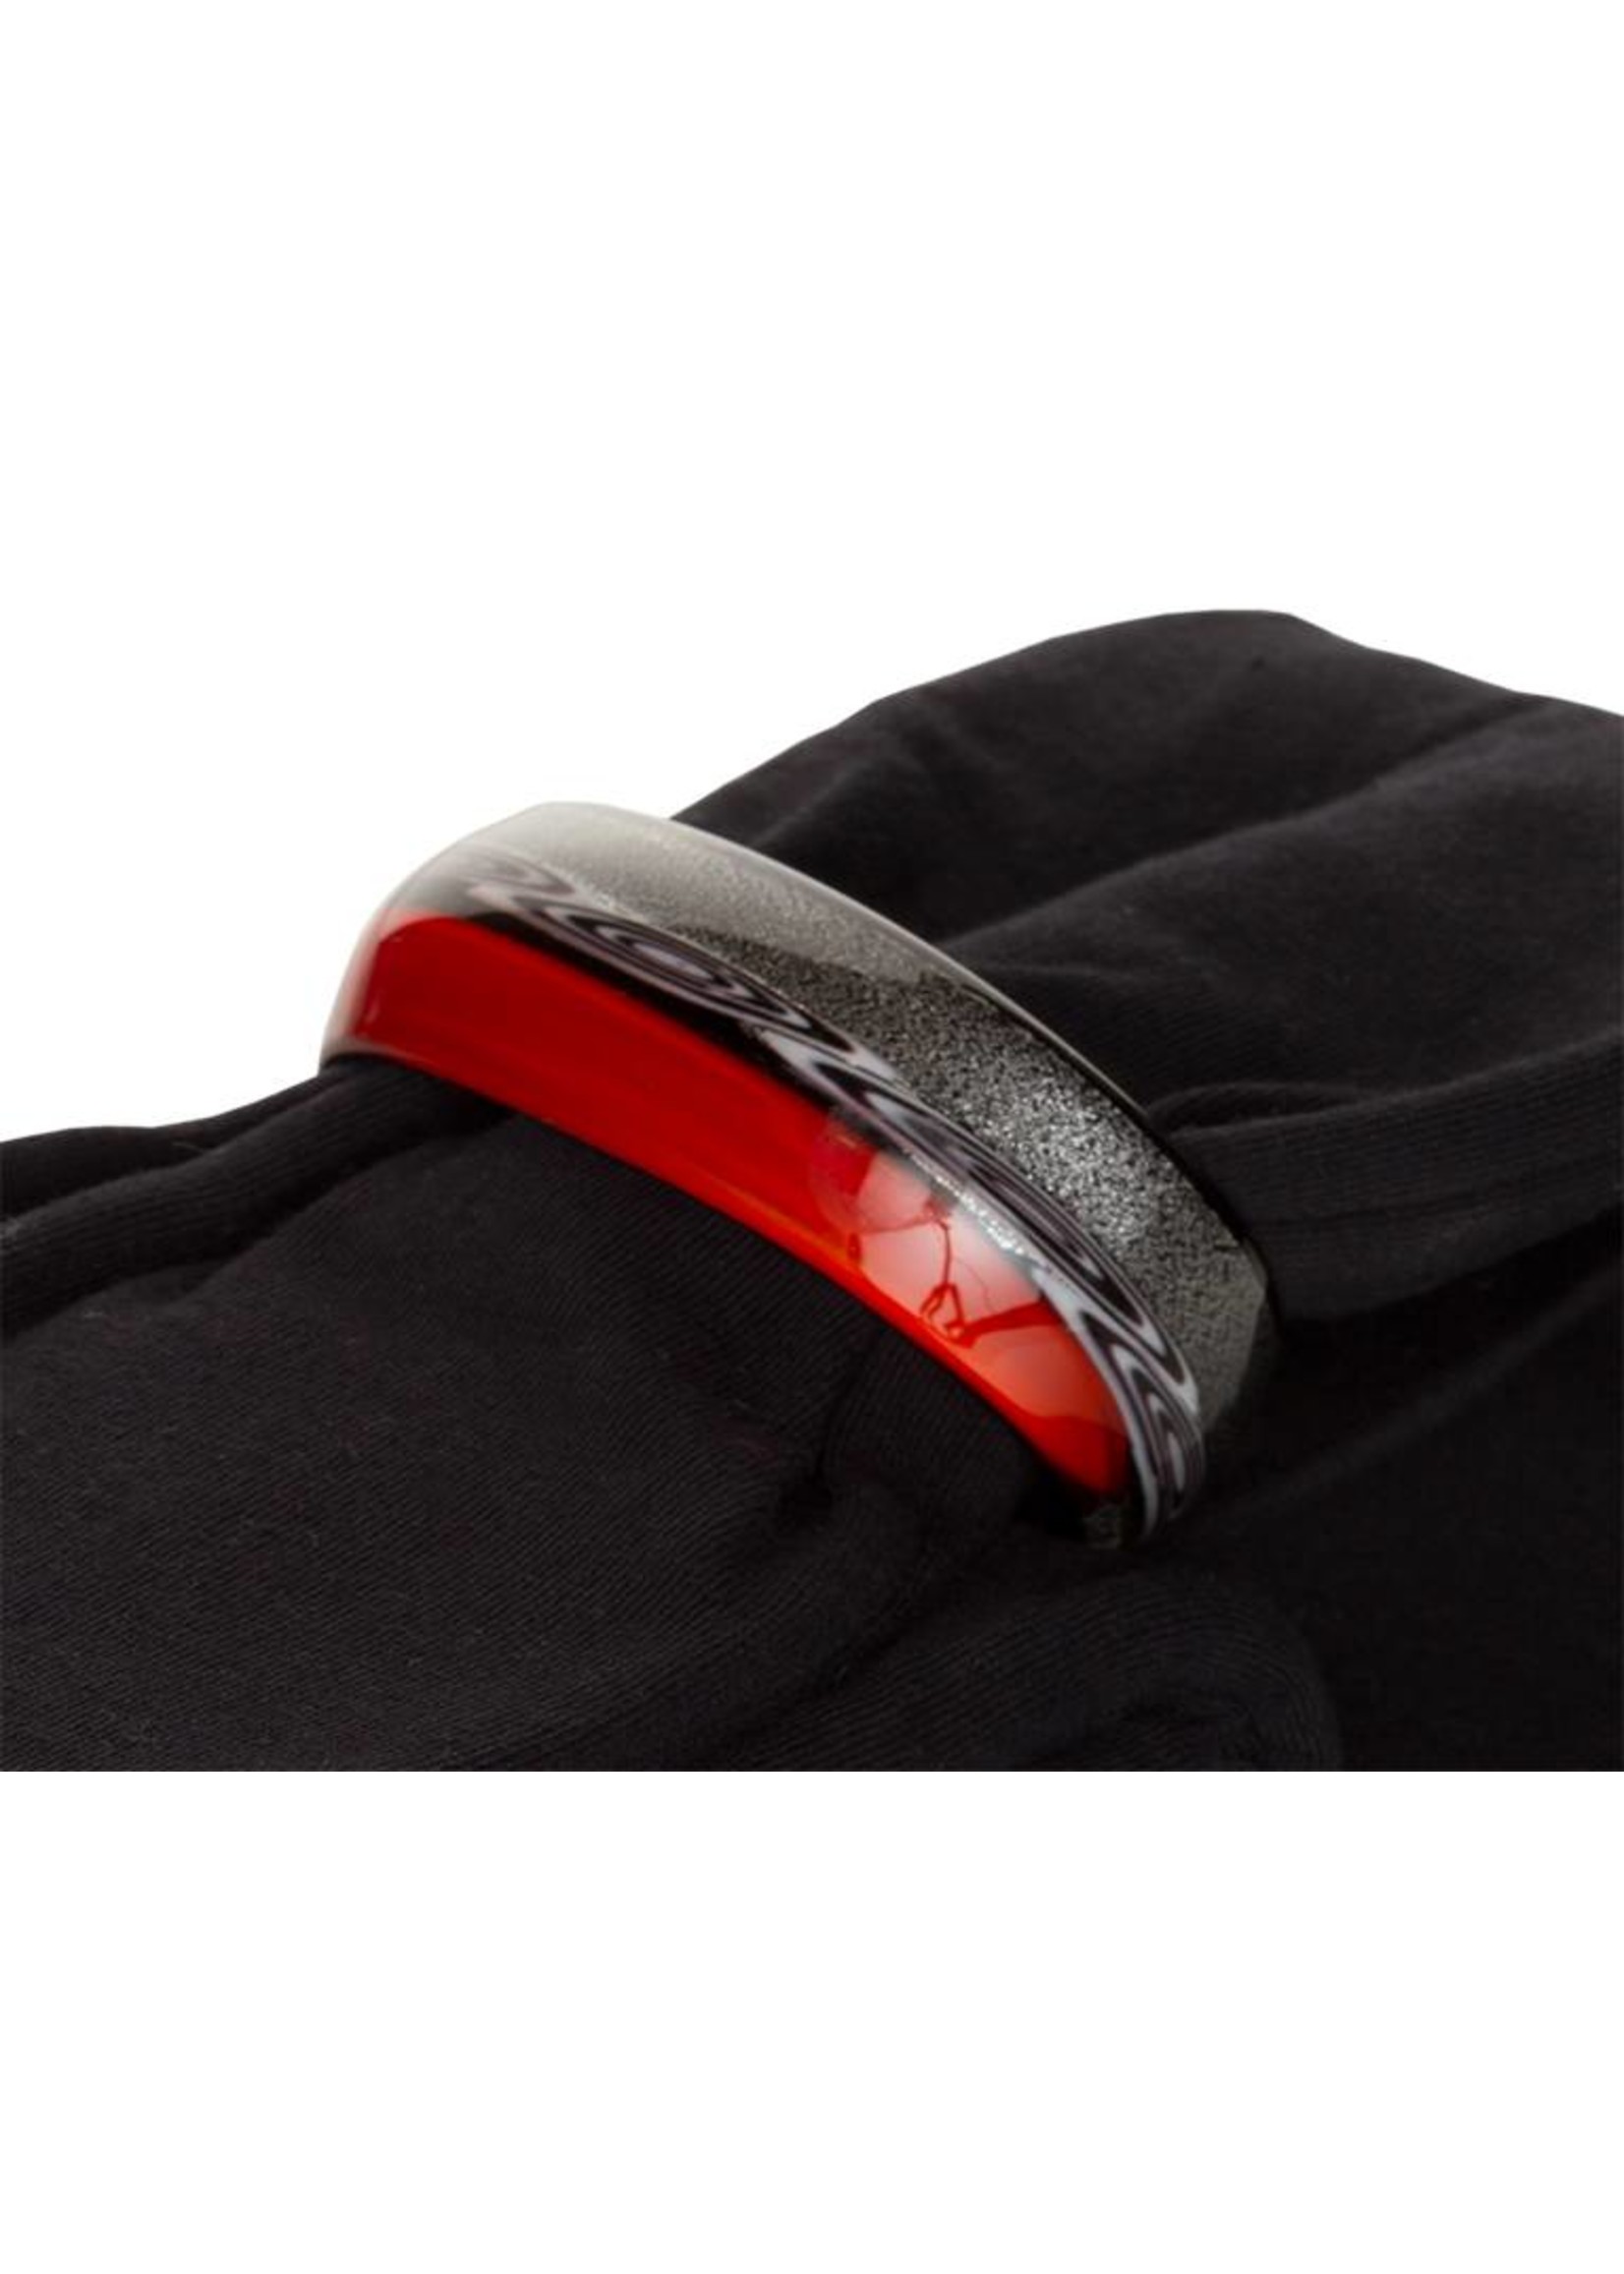 Embracelet in black/red Murano Glass Bangle